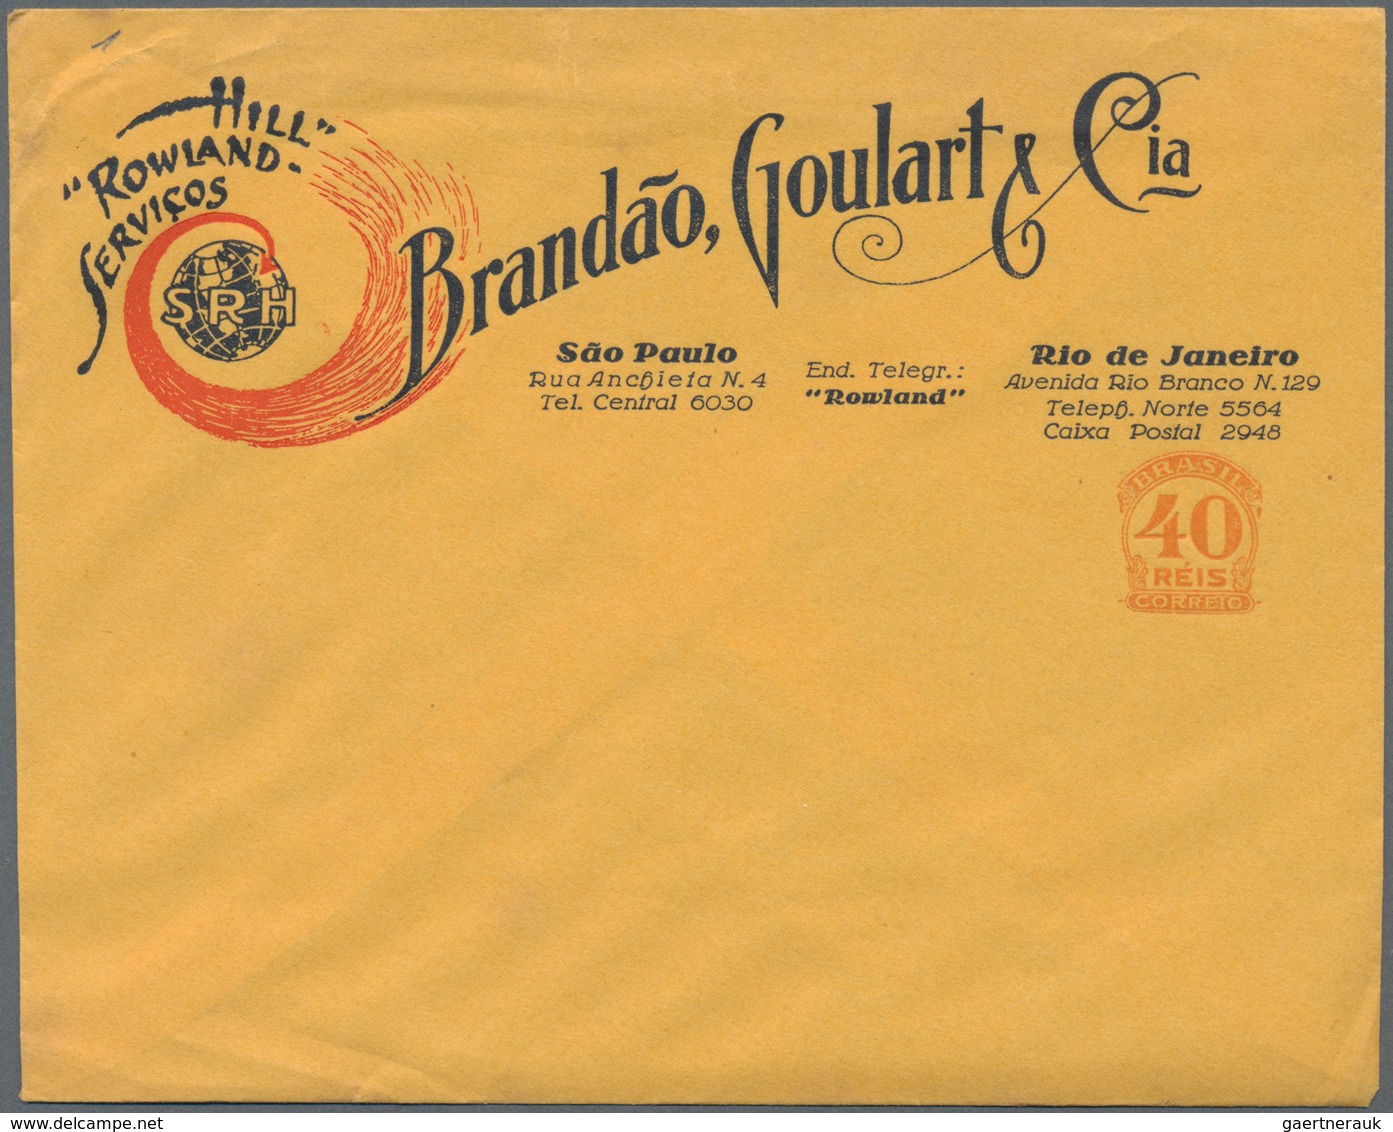 Brasilien - Ganzsachen: 1927, Stationery Advertising Letter 40 Reis "Hill Rowland Servicio Brandao, - Postal Stationery